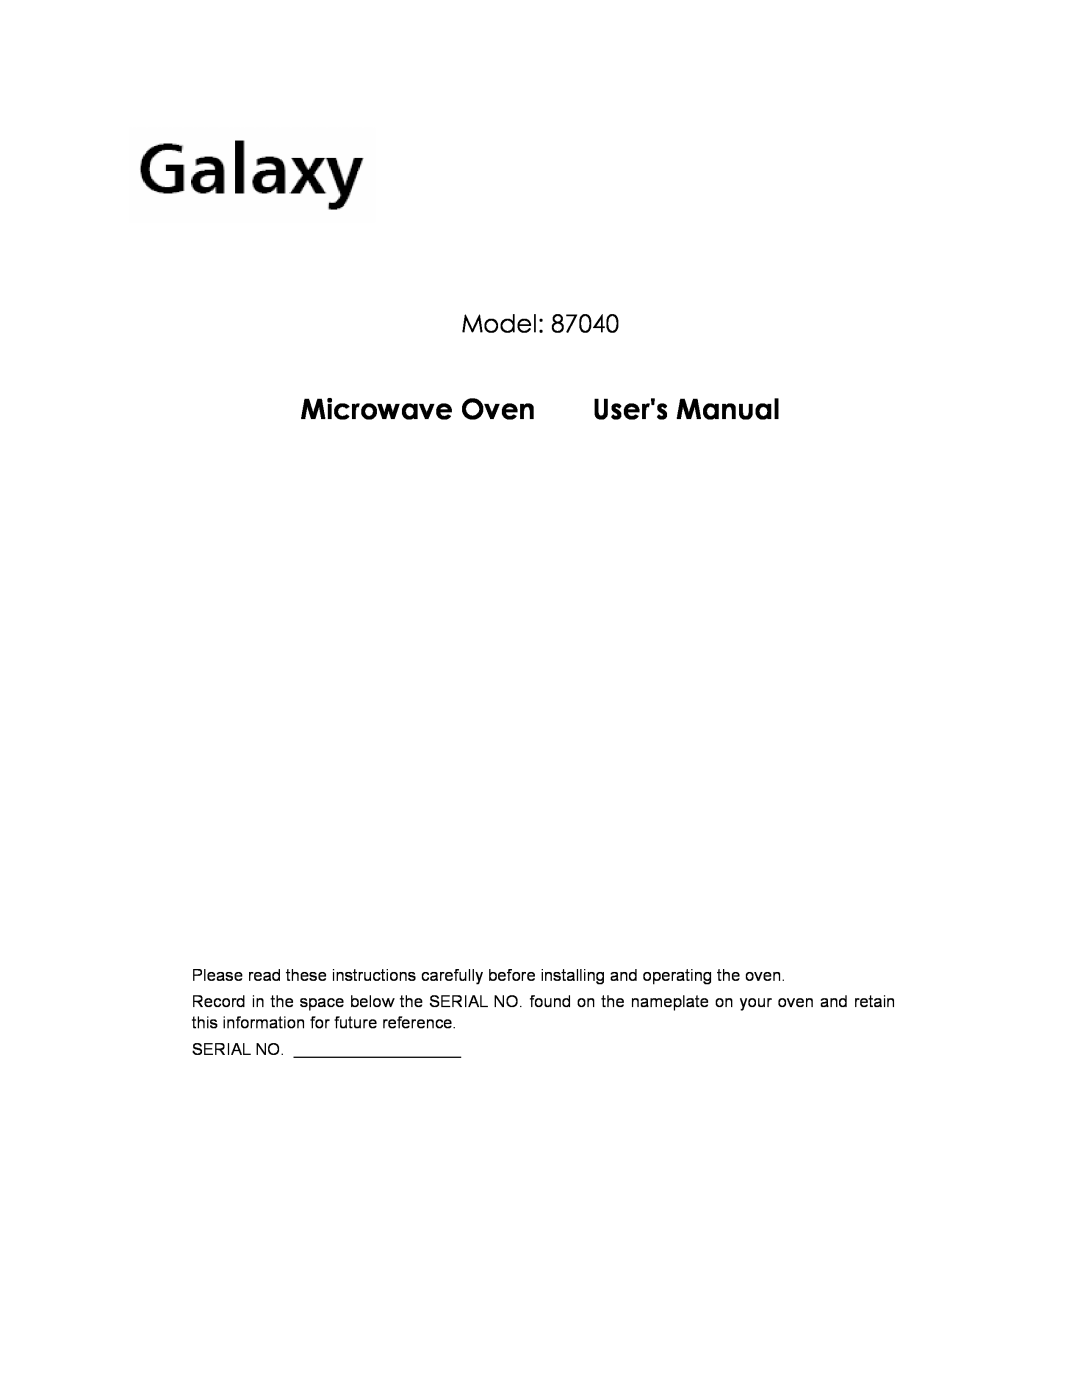 Galaxy Metal Gear 87040 user manual Microwave Oven, Model 